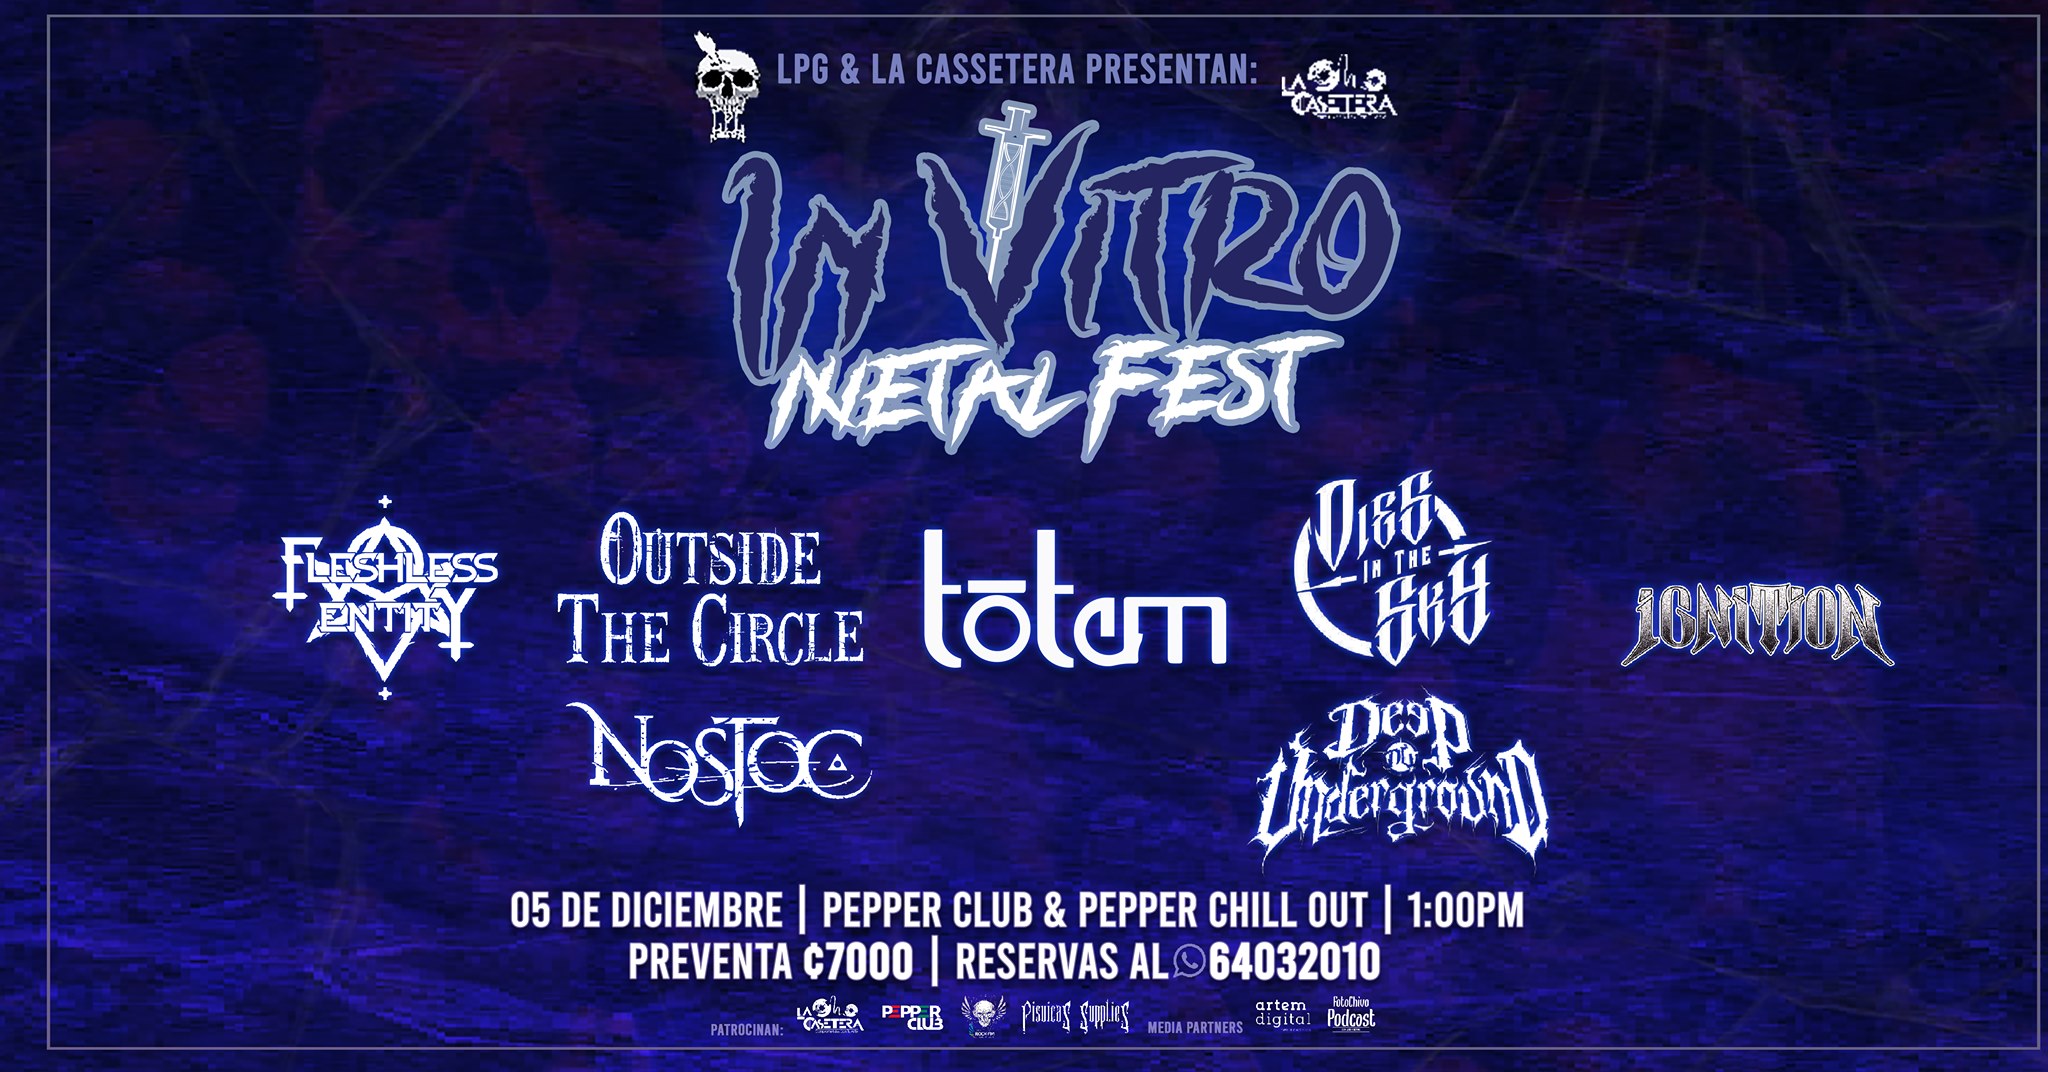 In Vitro Metal Fest